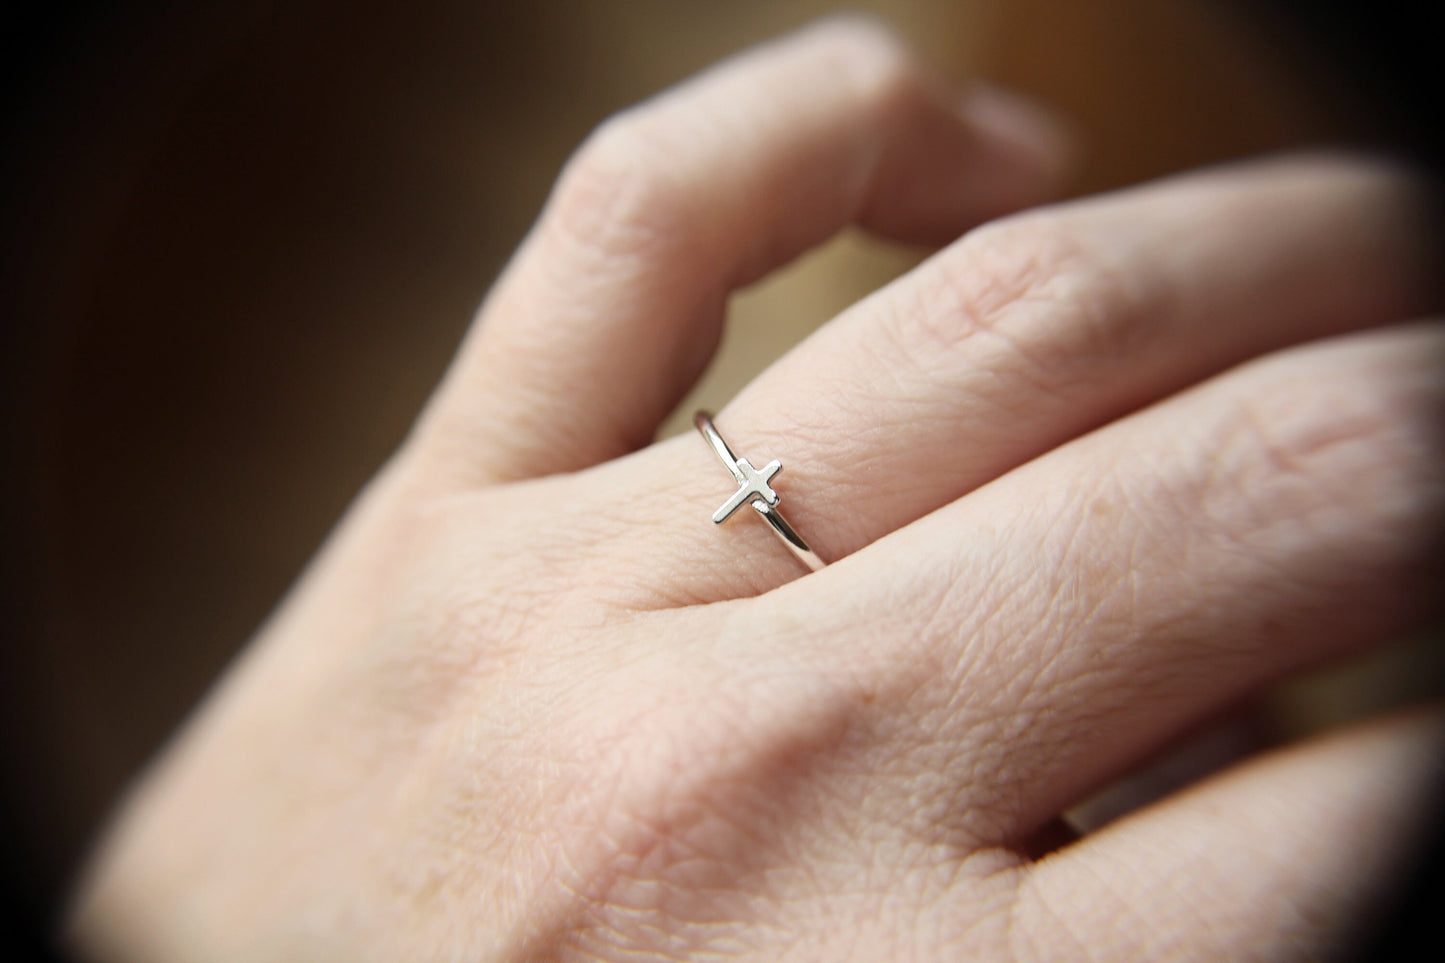 Tiny Sterling Silver Cross Ring, Tiny Cross Ring, Easter gift, Cross Ring, Christian Ring, Baptism Ring, Faith Ring, Silver Cross Ring, Gift